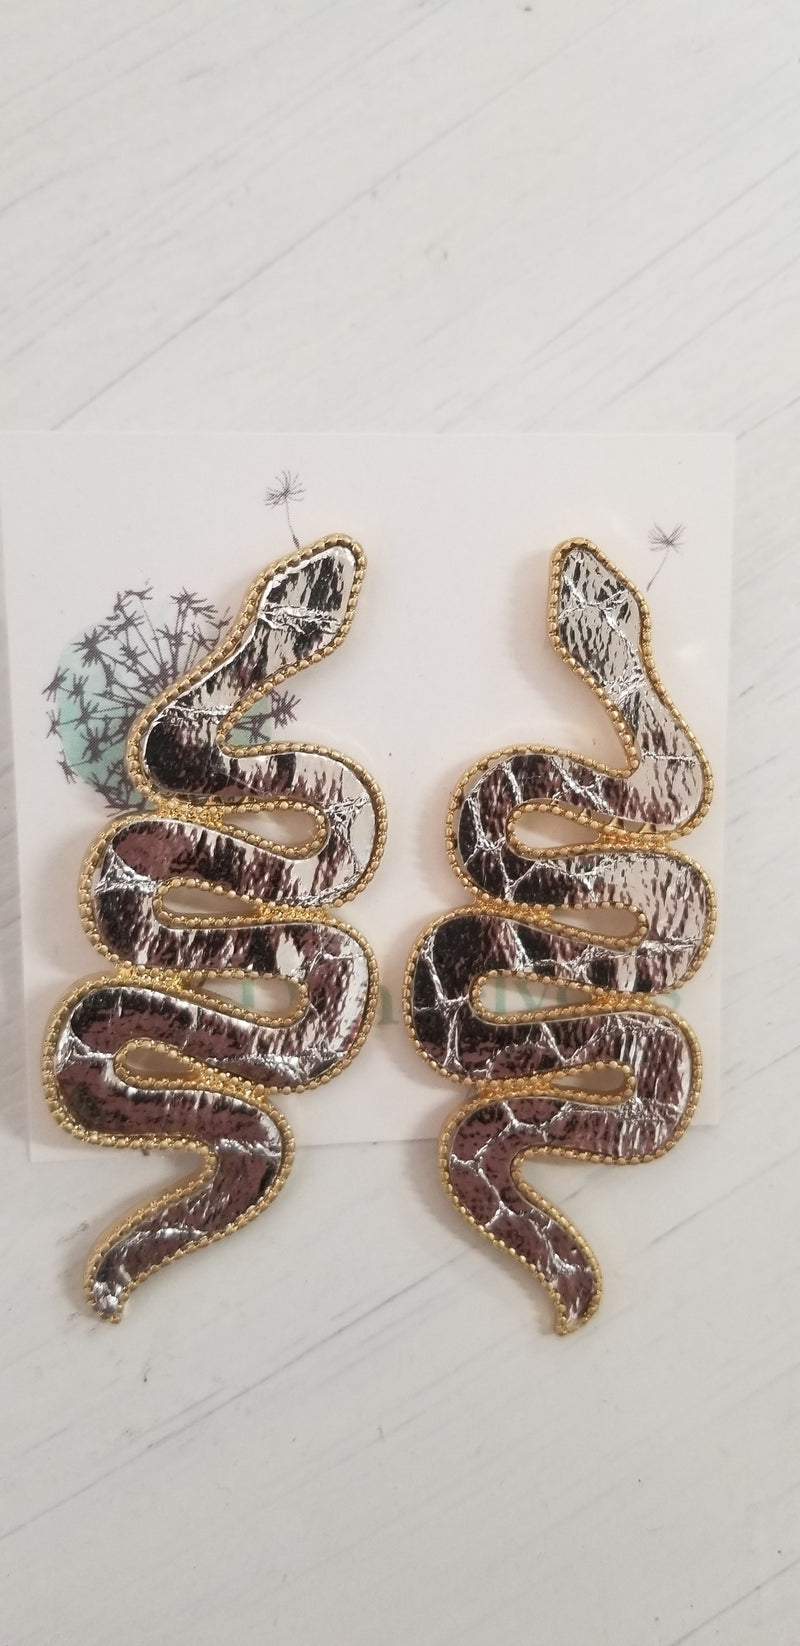 Leather Snake Earrings